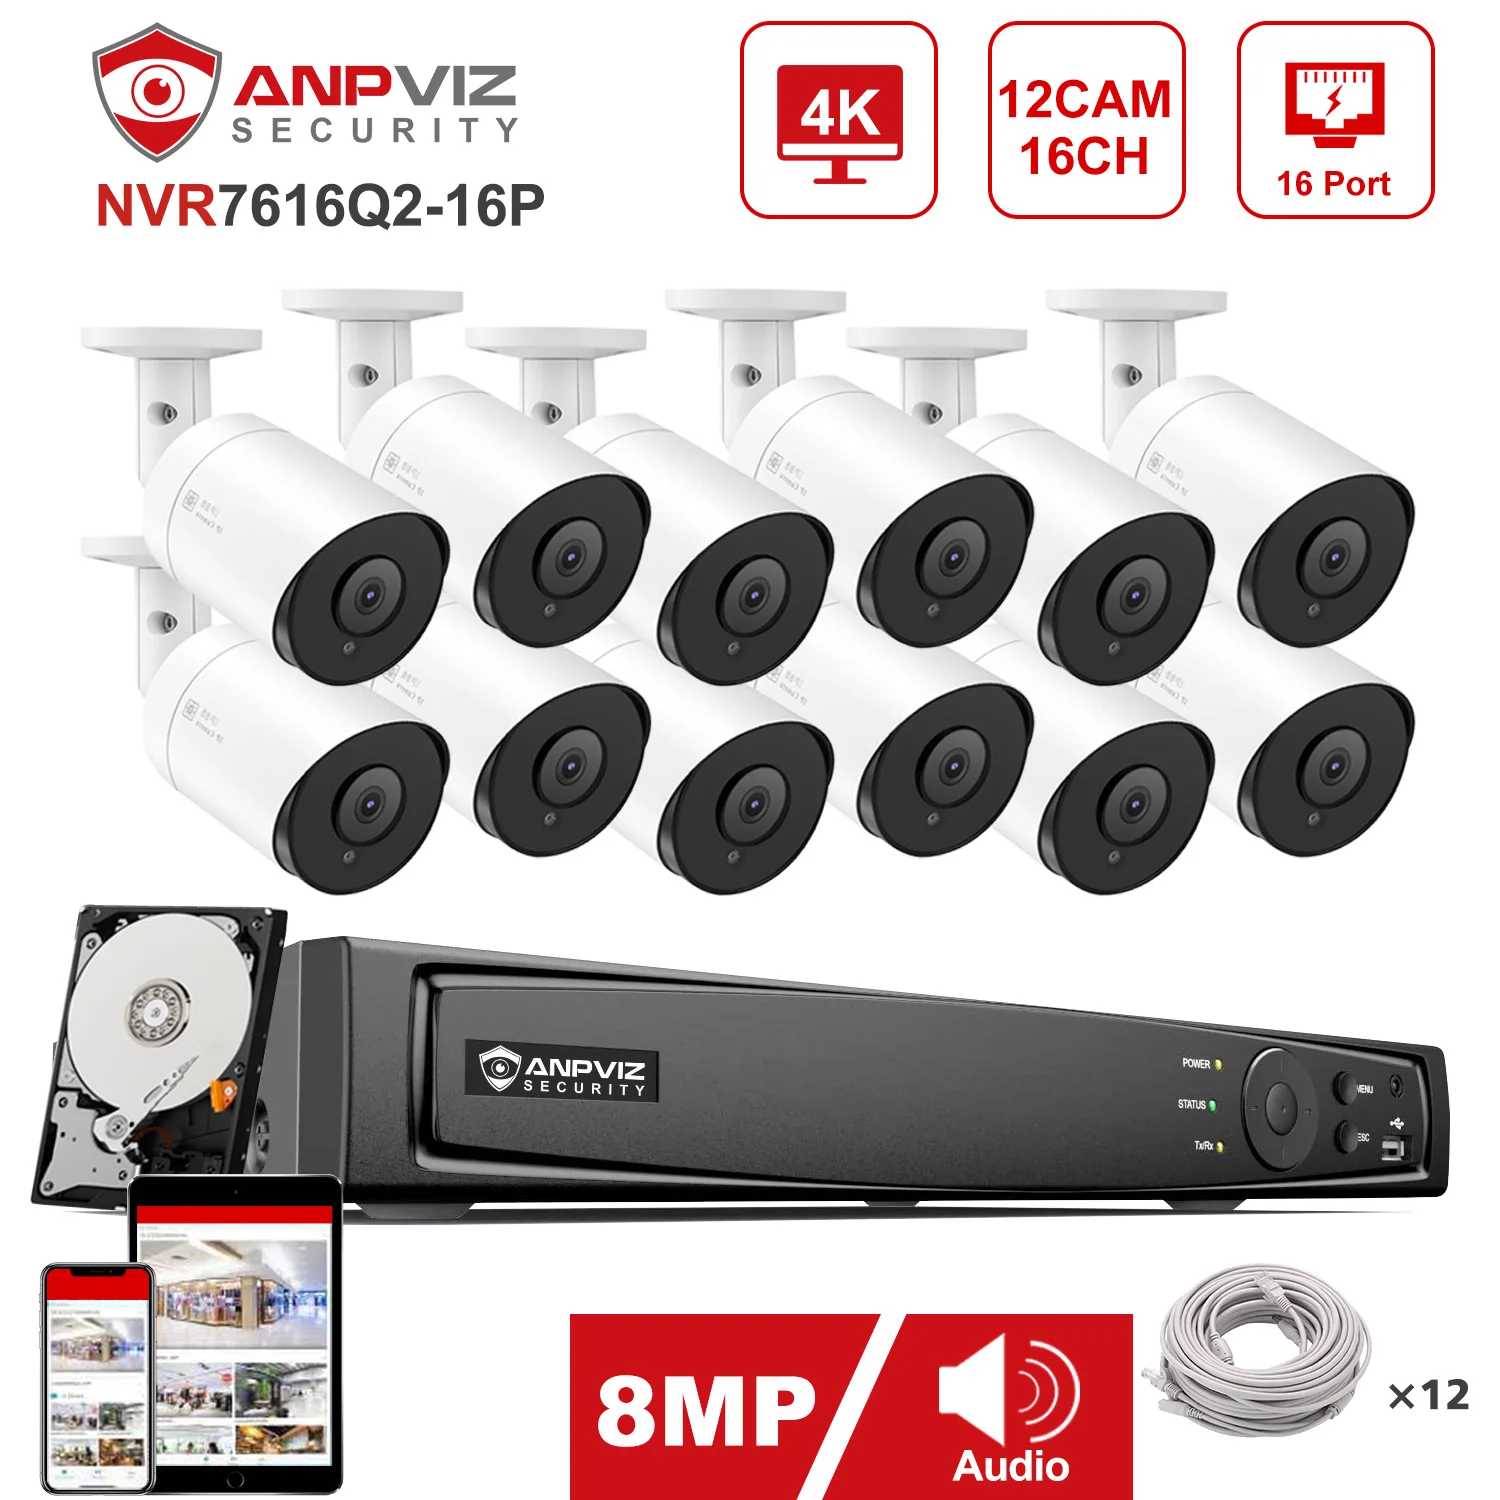 Anpviz 16CH 4K NVR Anpviz 12pcs 8MP POE IP Camera System Indoor/Outdoor IP Camera CCTV Security Surveillance Kit IP66 30m Remote